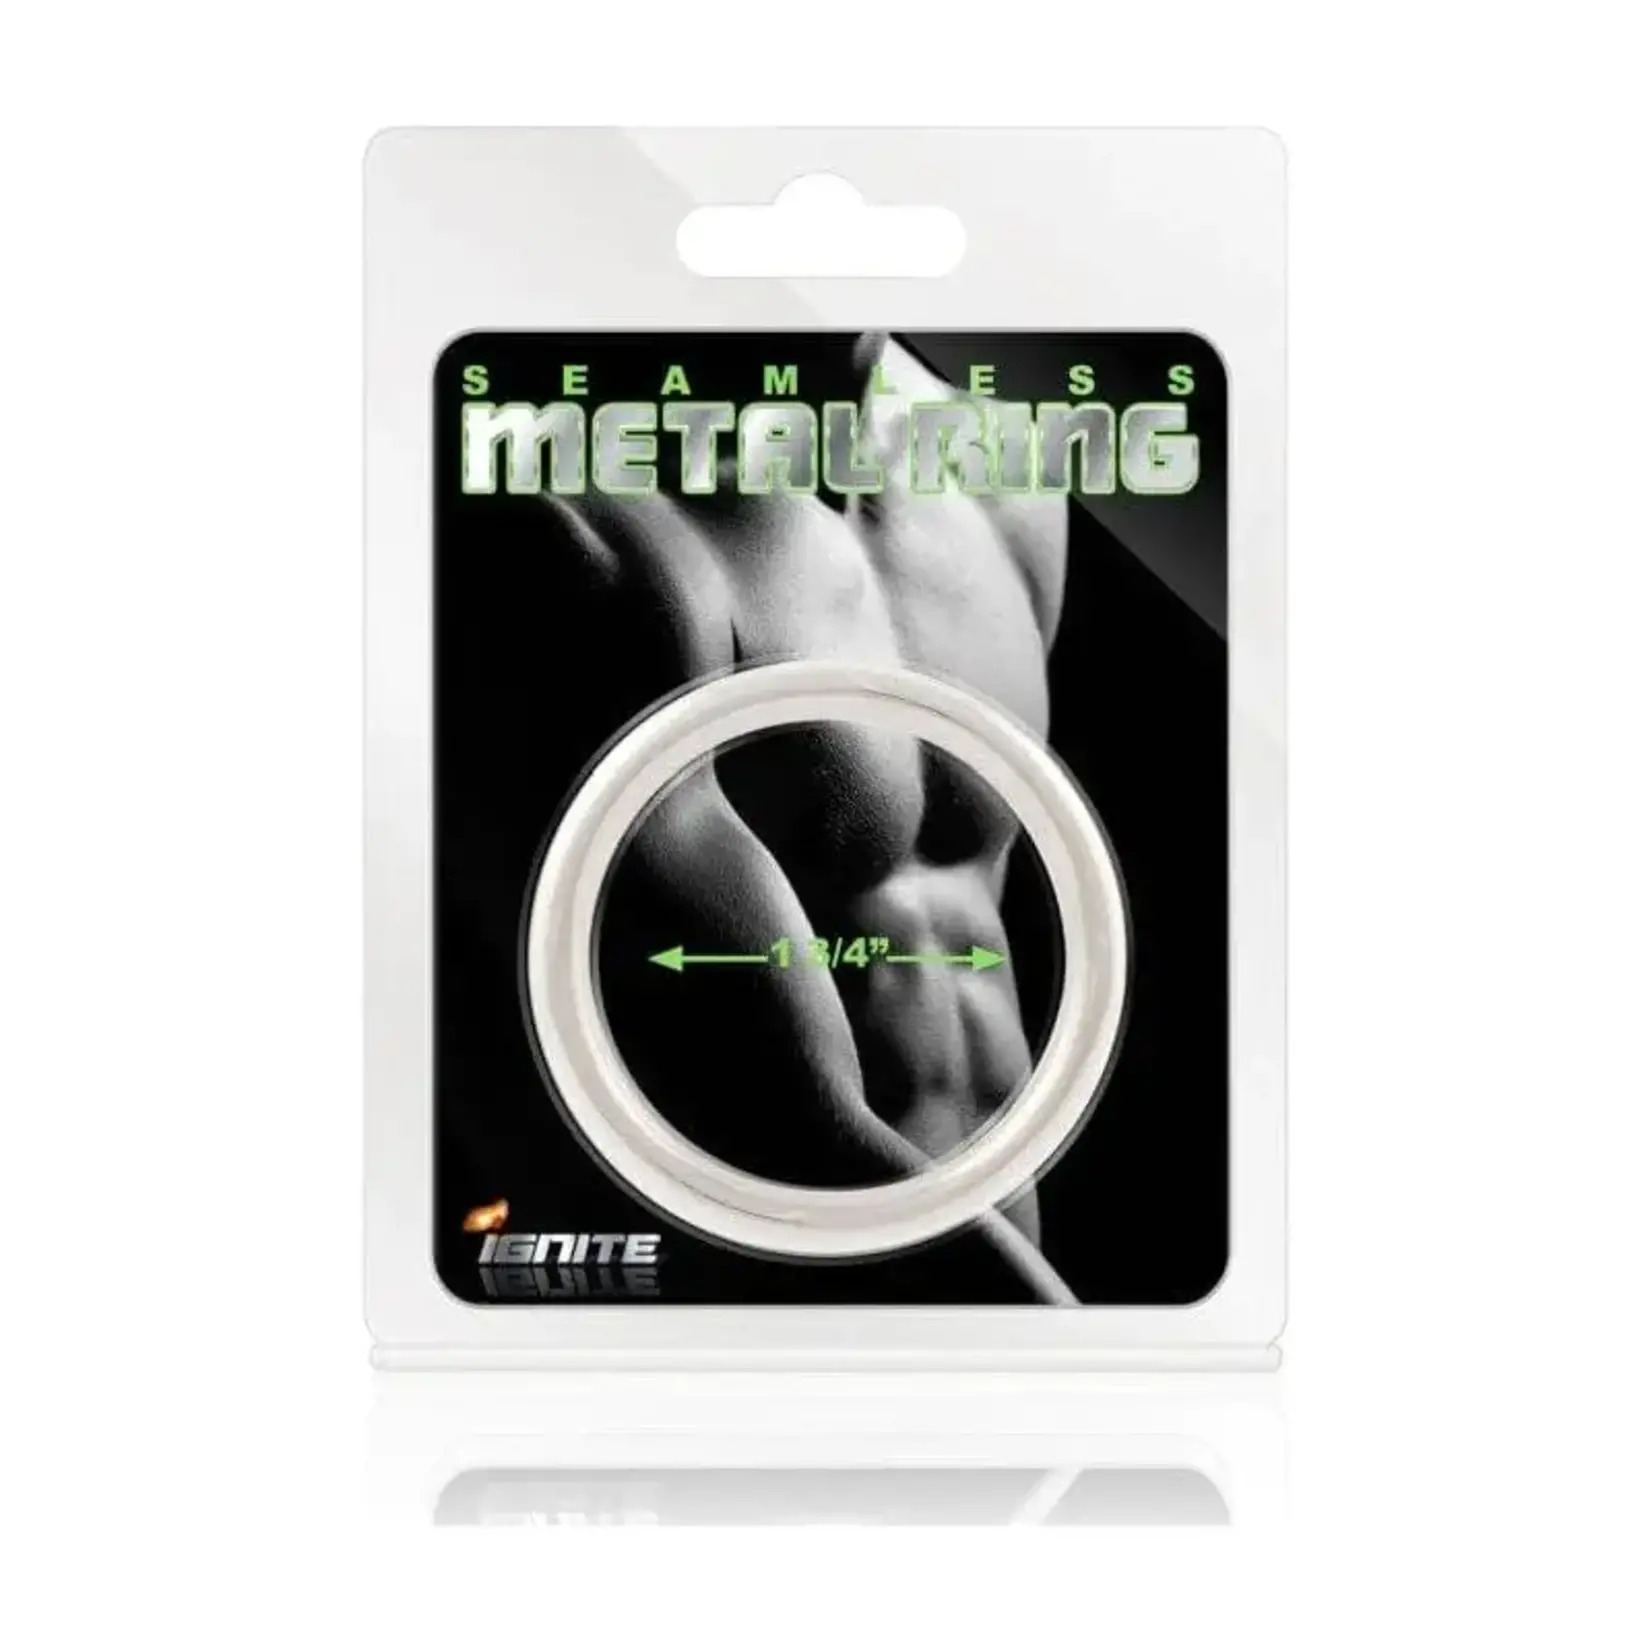 Ignite Ignite 1 1/4" seamless metal ring